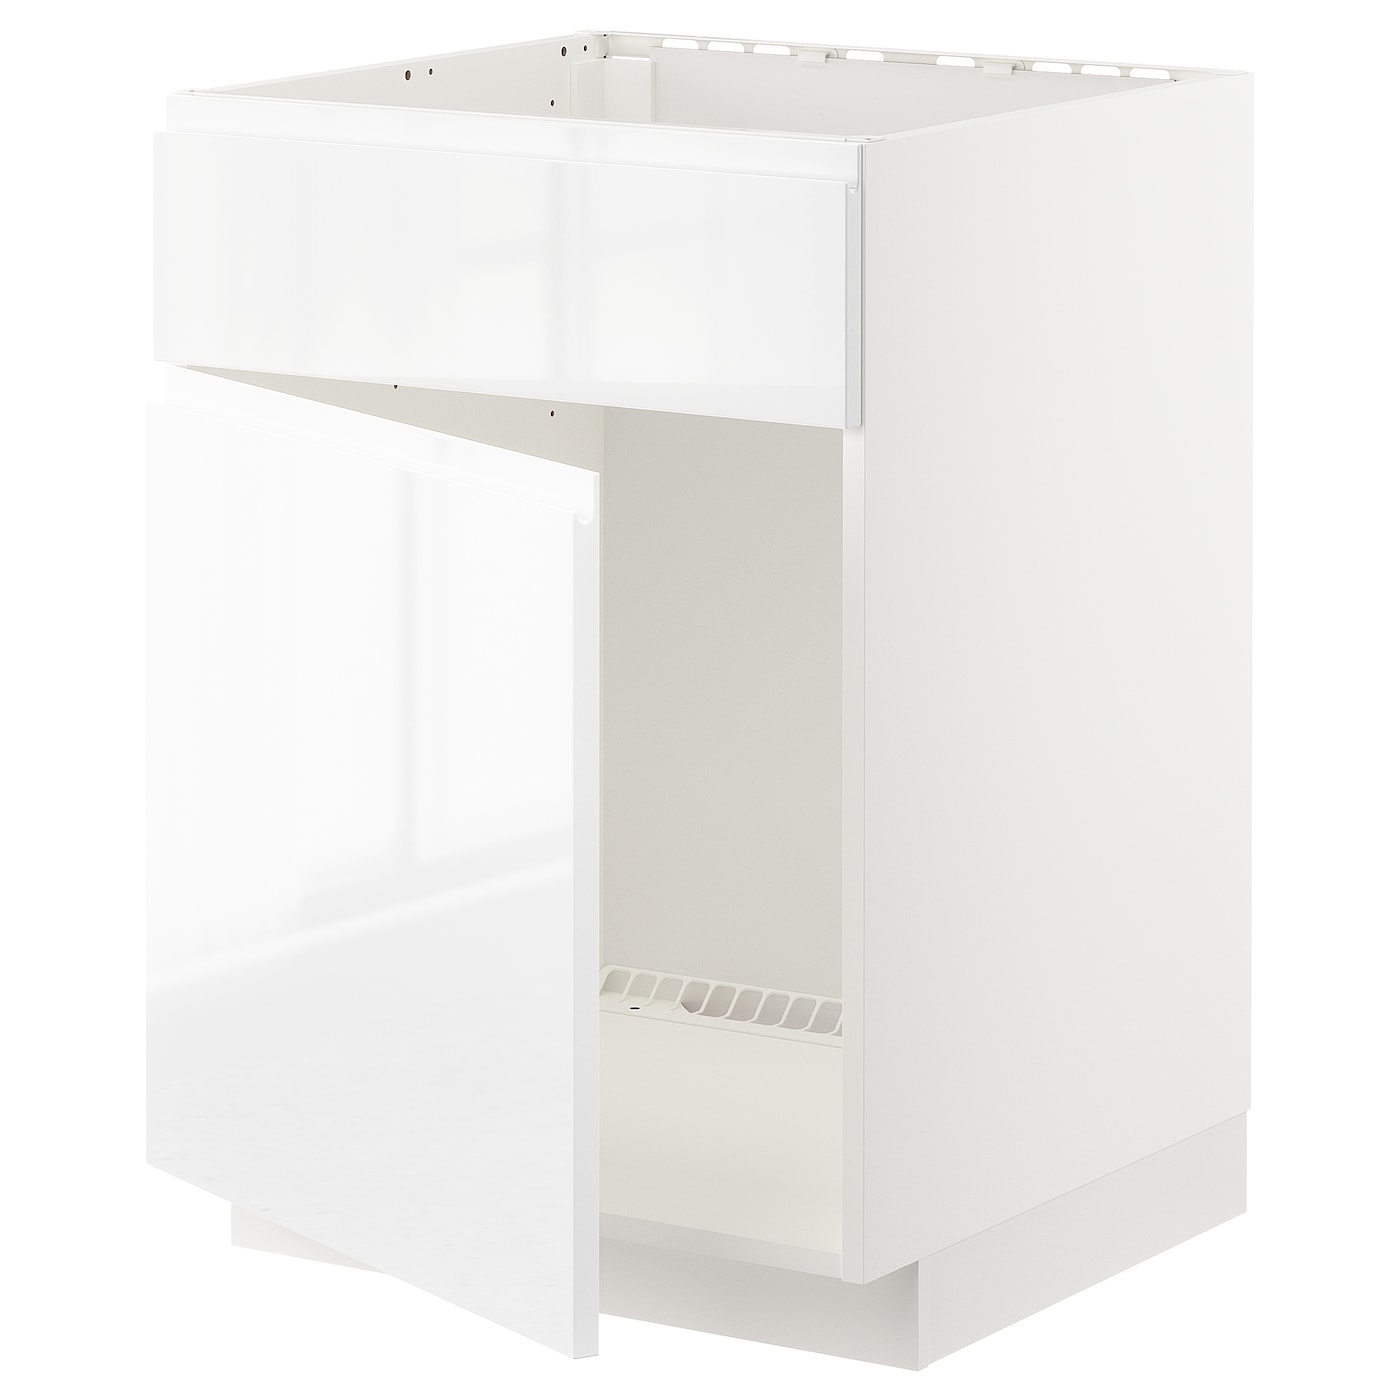 Напольный шкаф - METOD IKEA/ МЕТОД ИКЕА,  88х60 см, белый